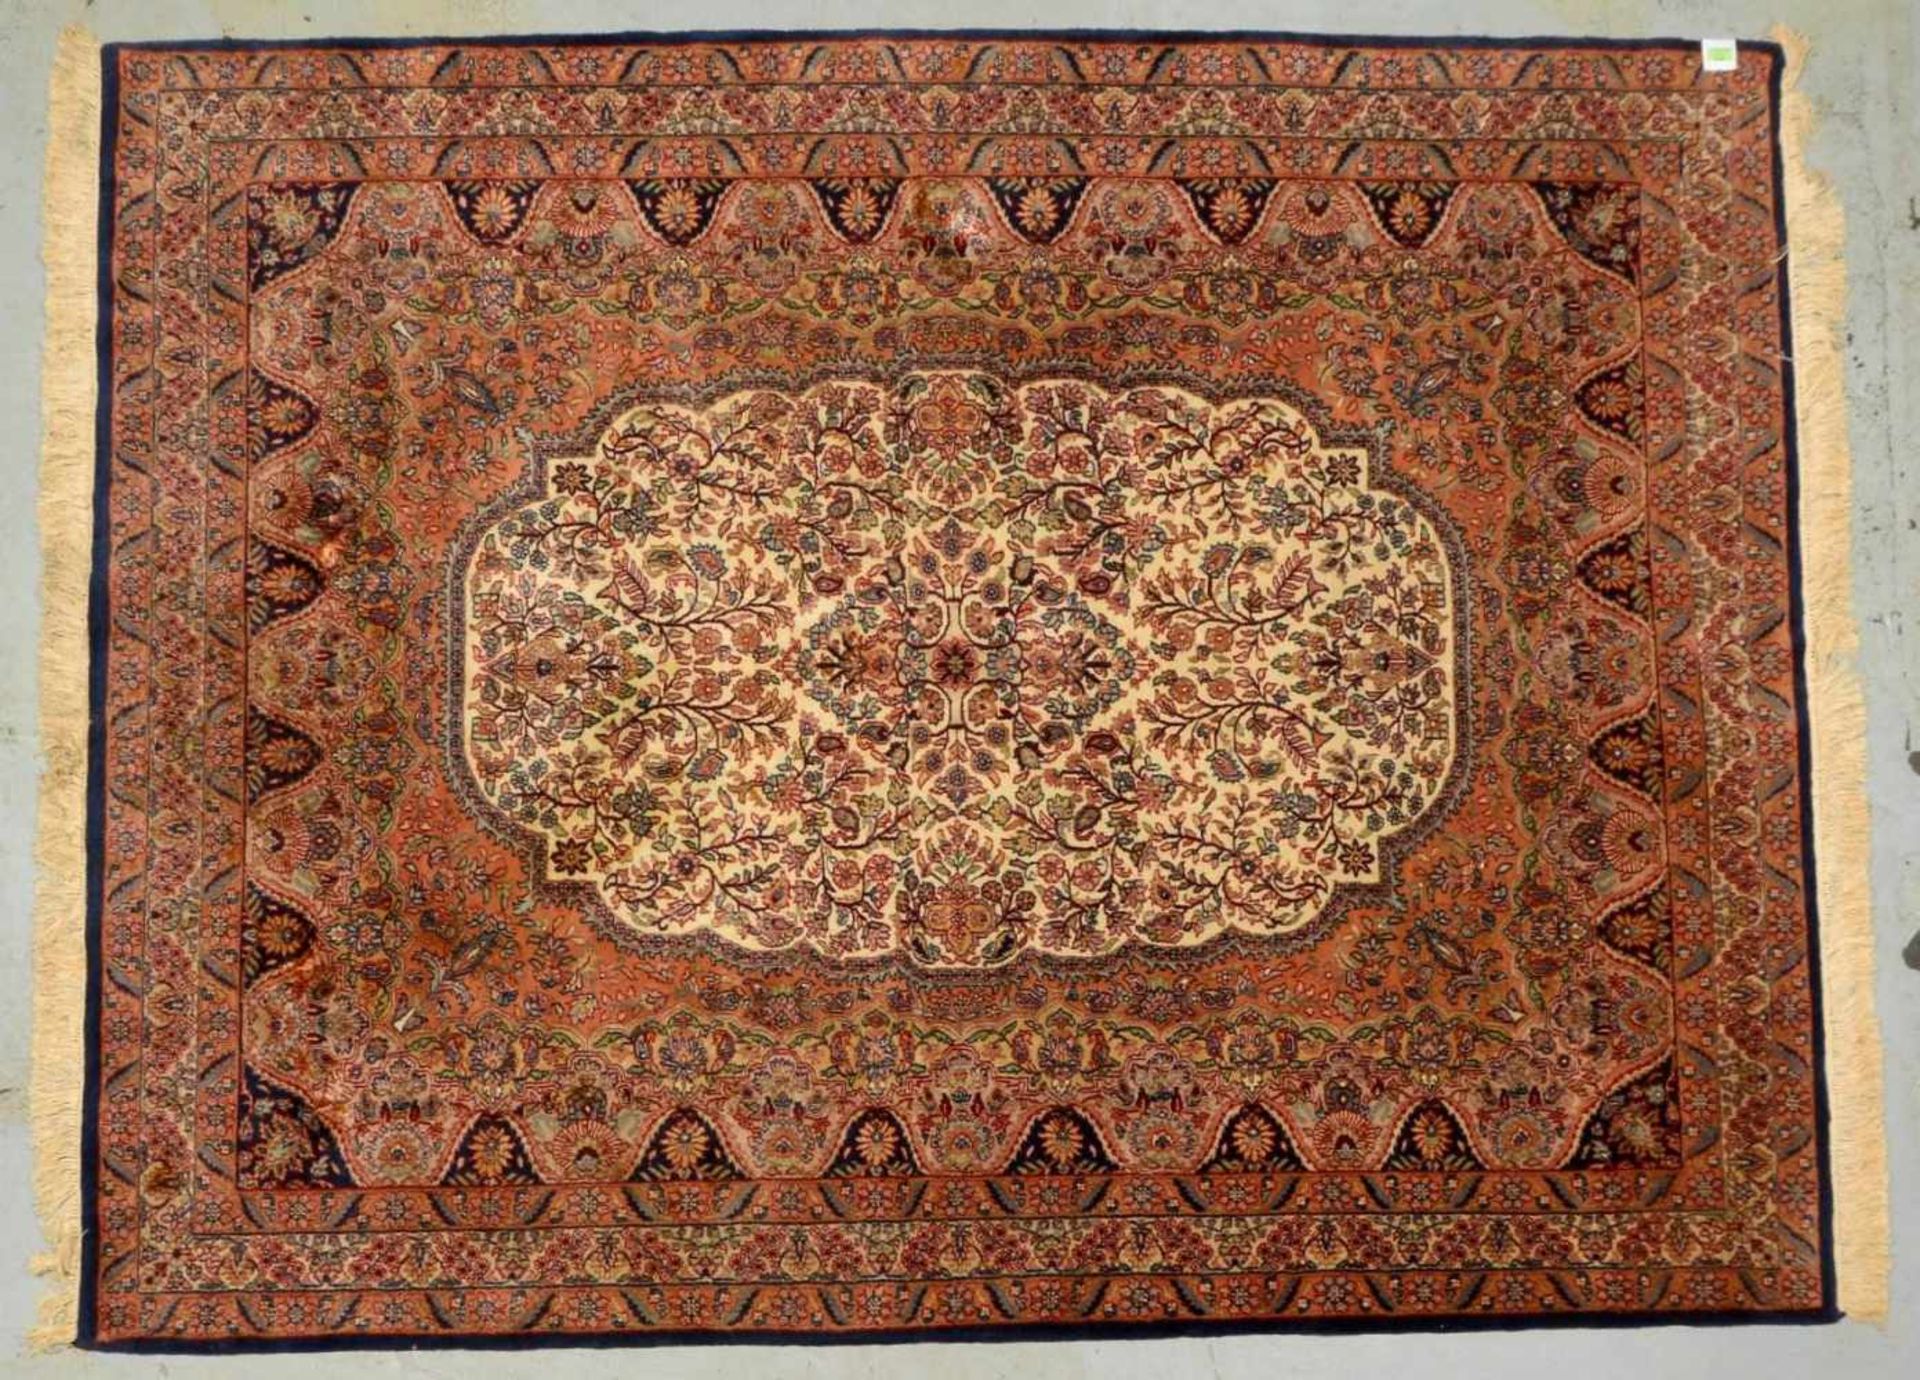 Orientteppich, feste Knüpfung, hellgrundig, komplett, hochflorig; Maße 255 x 192 cm""""